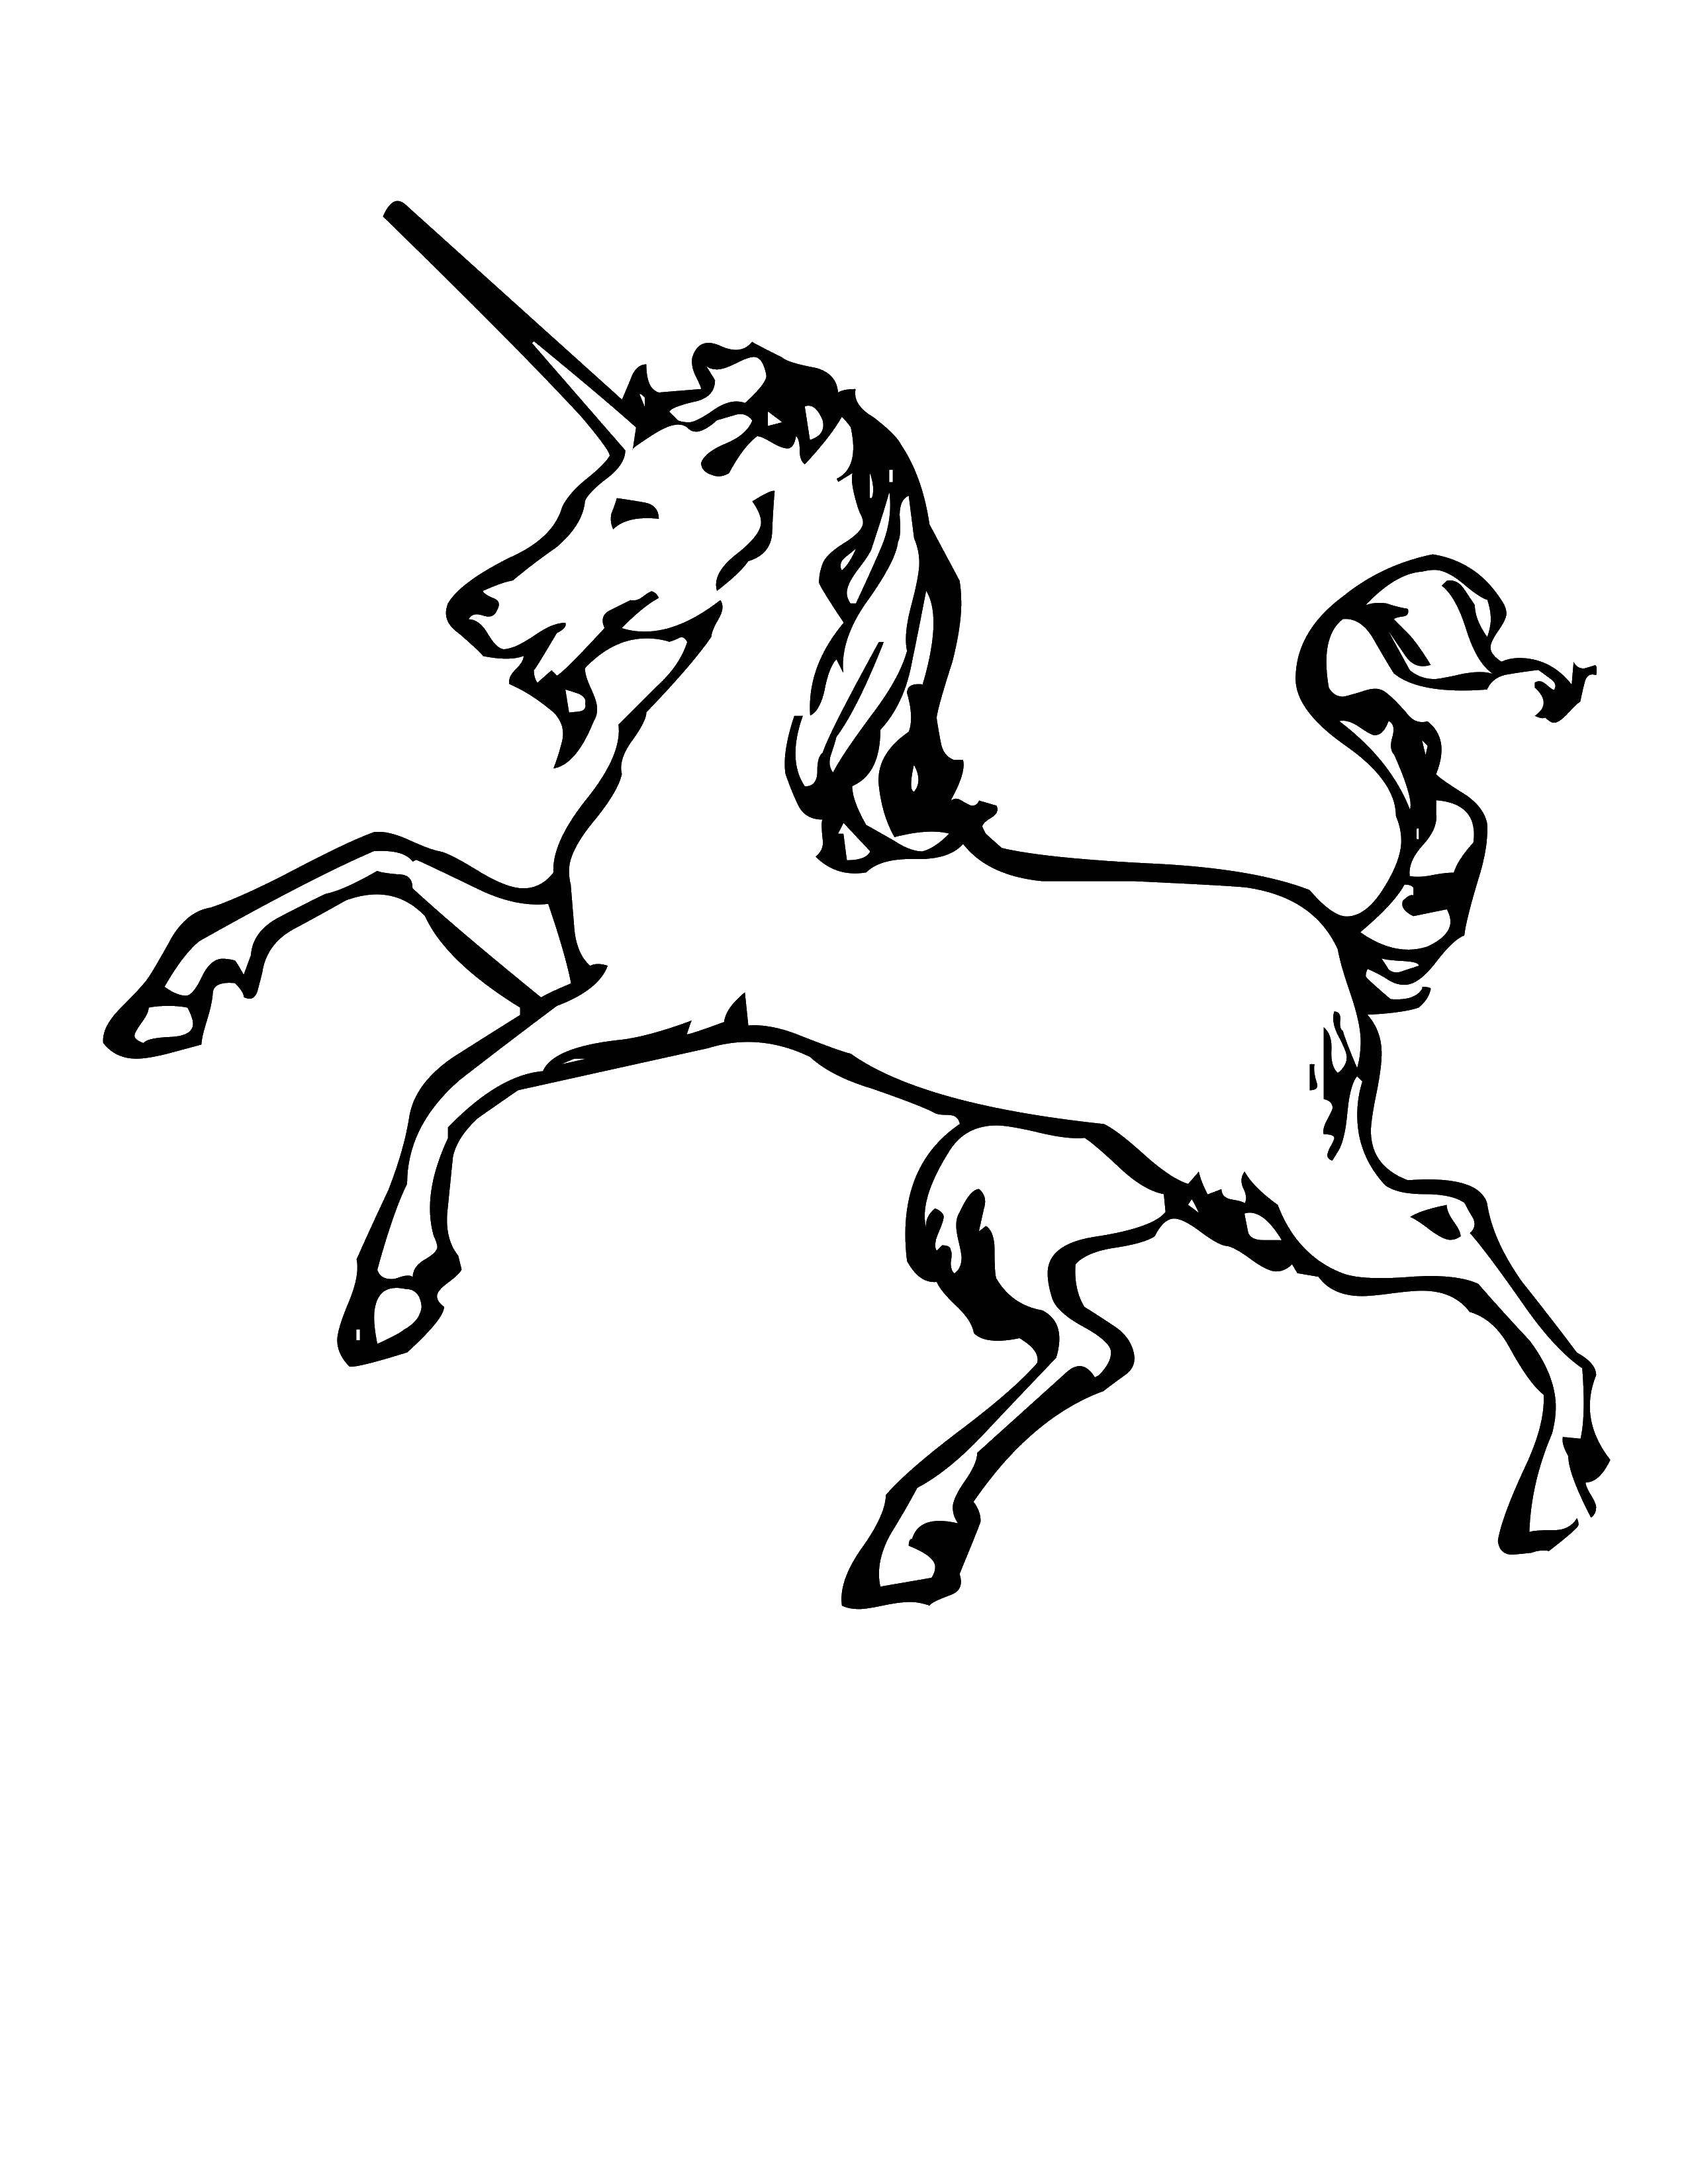 Название: Раскраска Единорог. Категория: лошади. Теги: лошади, единороги.